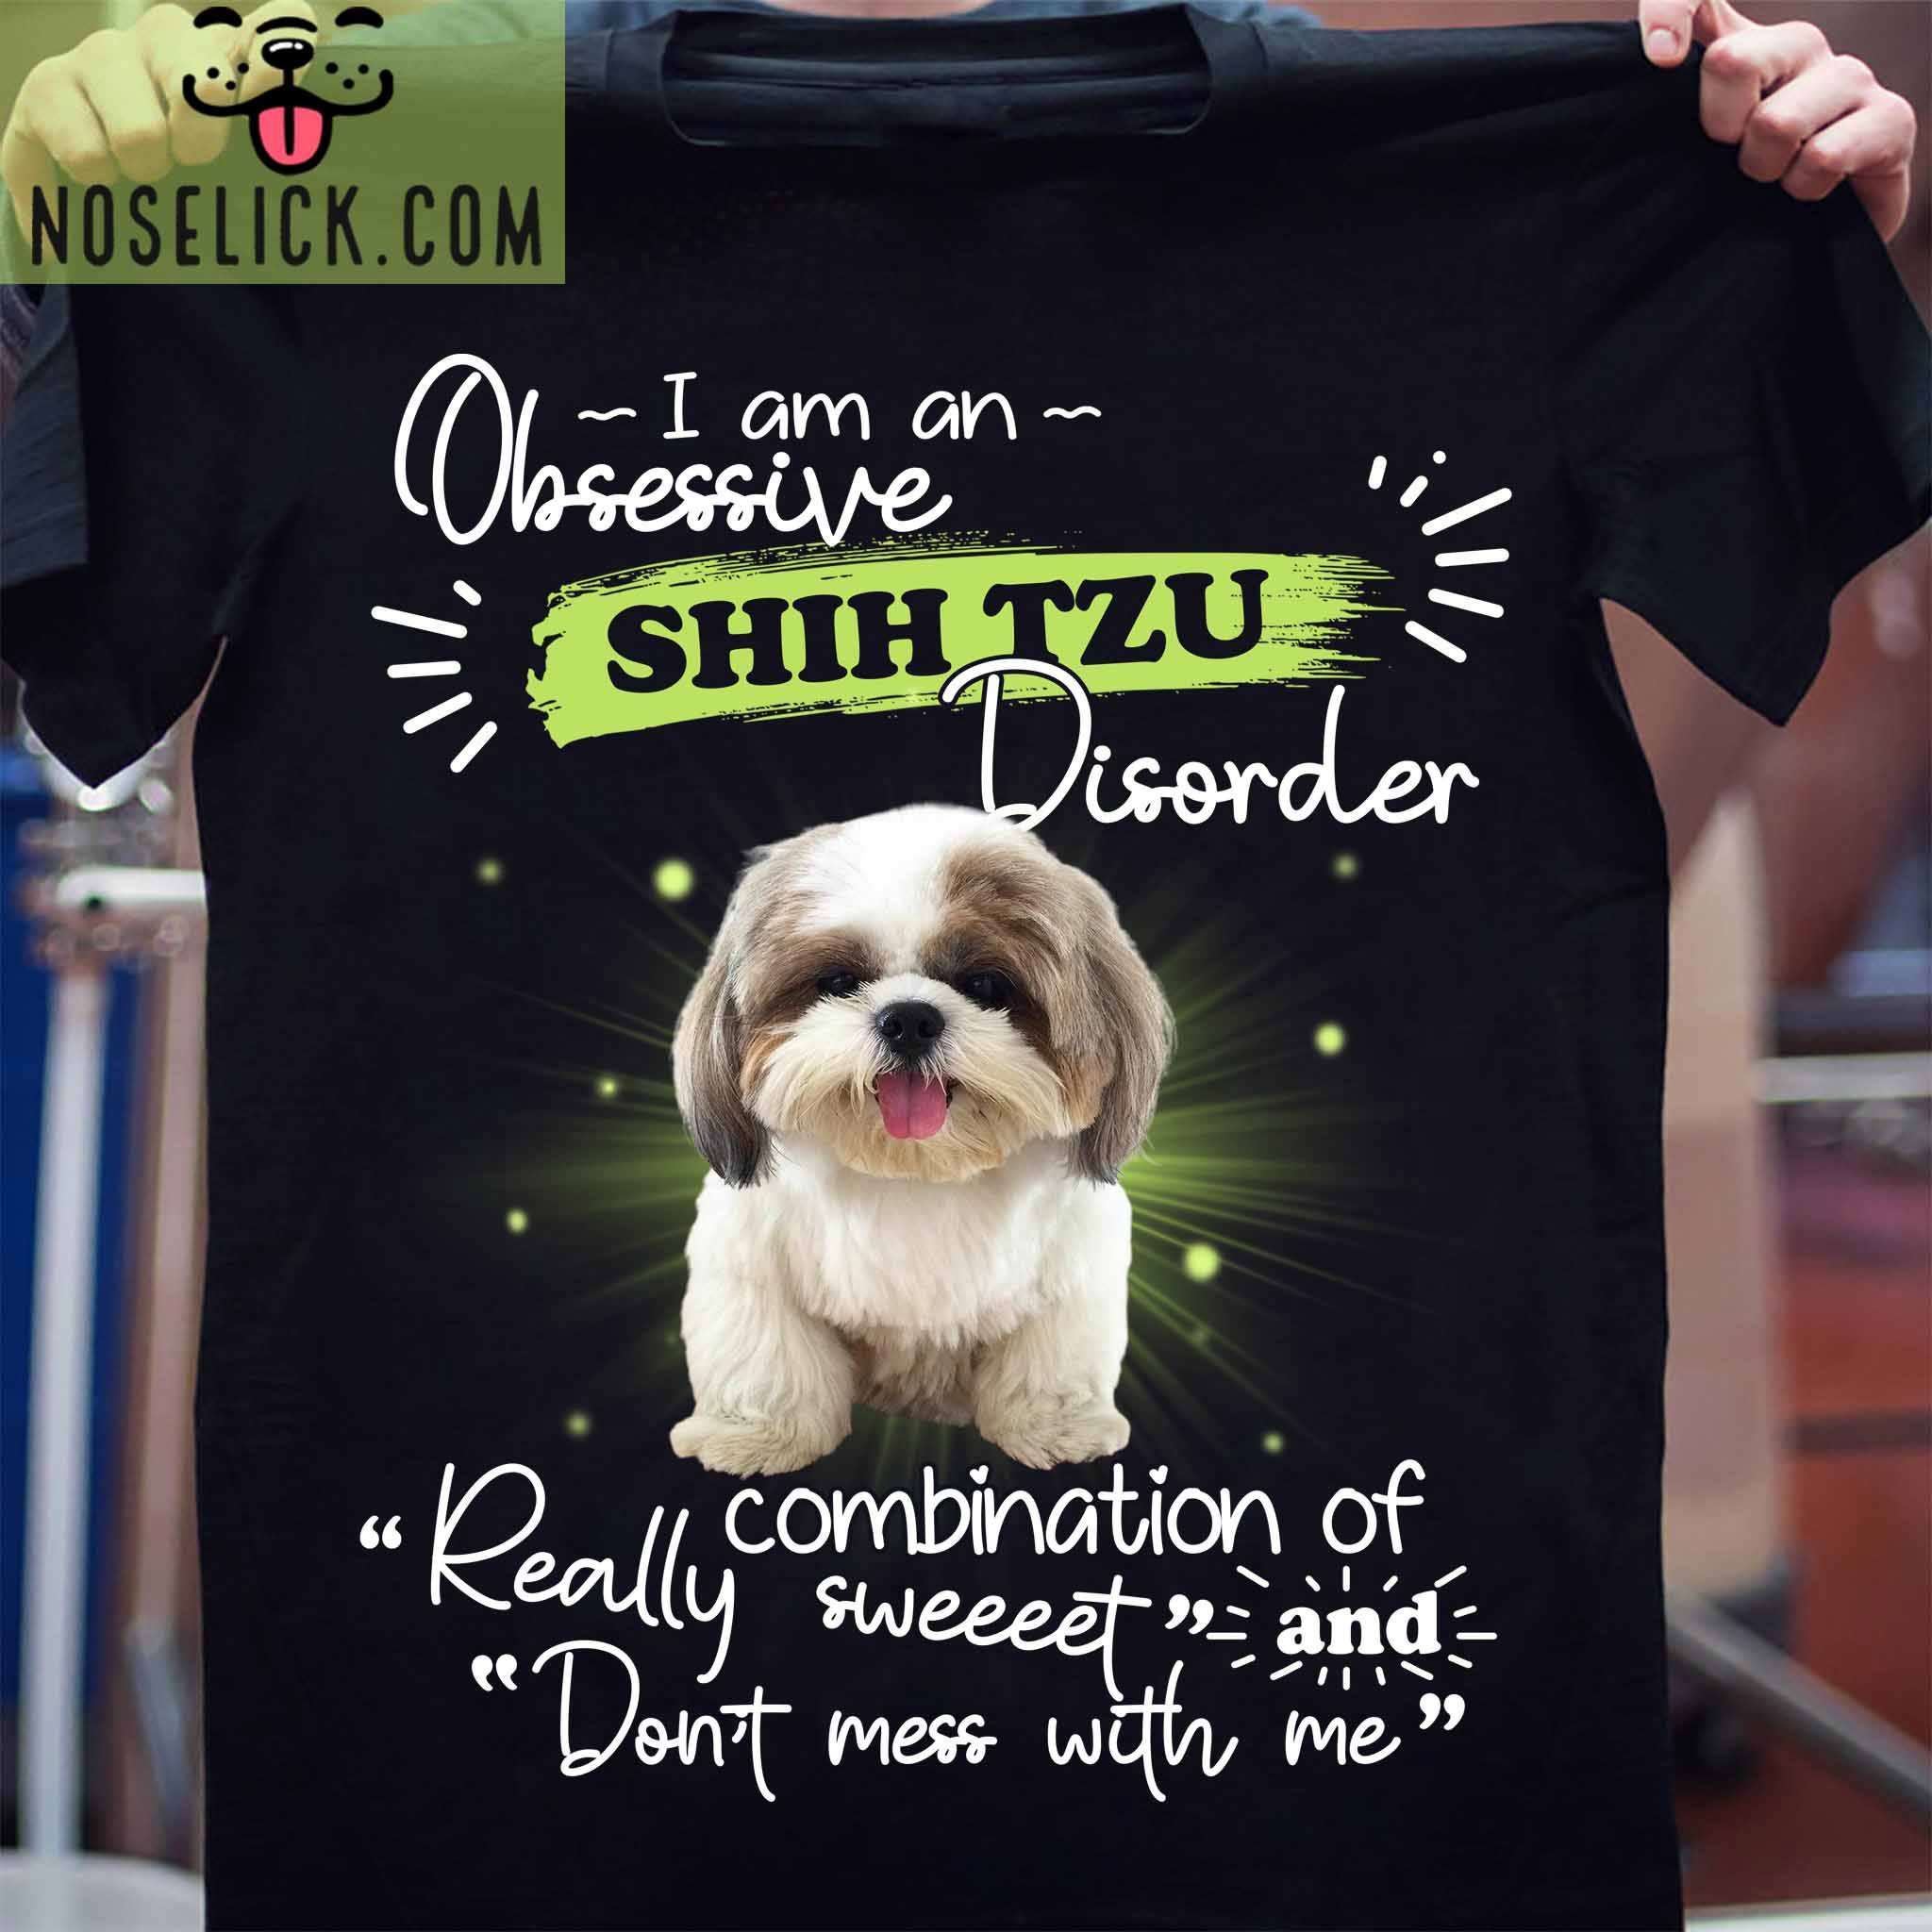 I am an obsessive Shih Tzu disorder - Gorgeous Shih Tzu dog, dog lover T-shirt